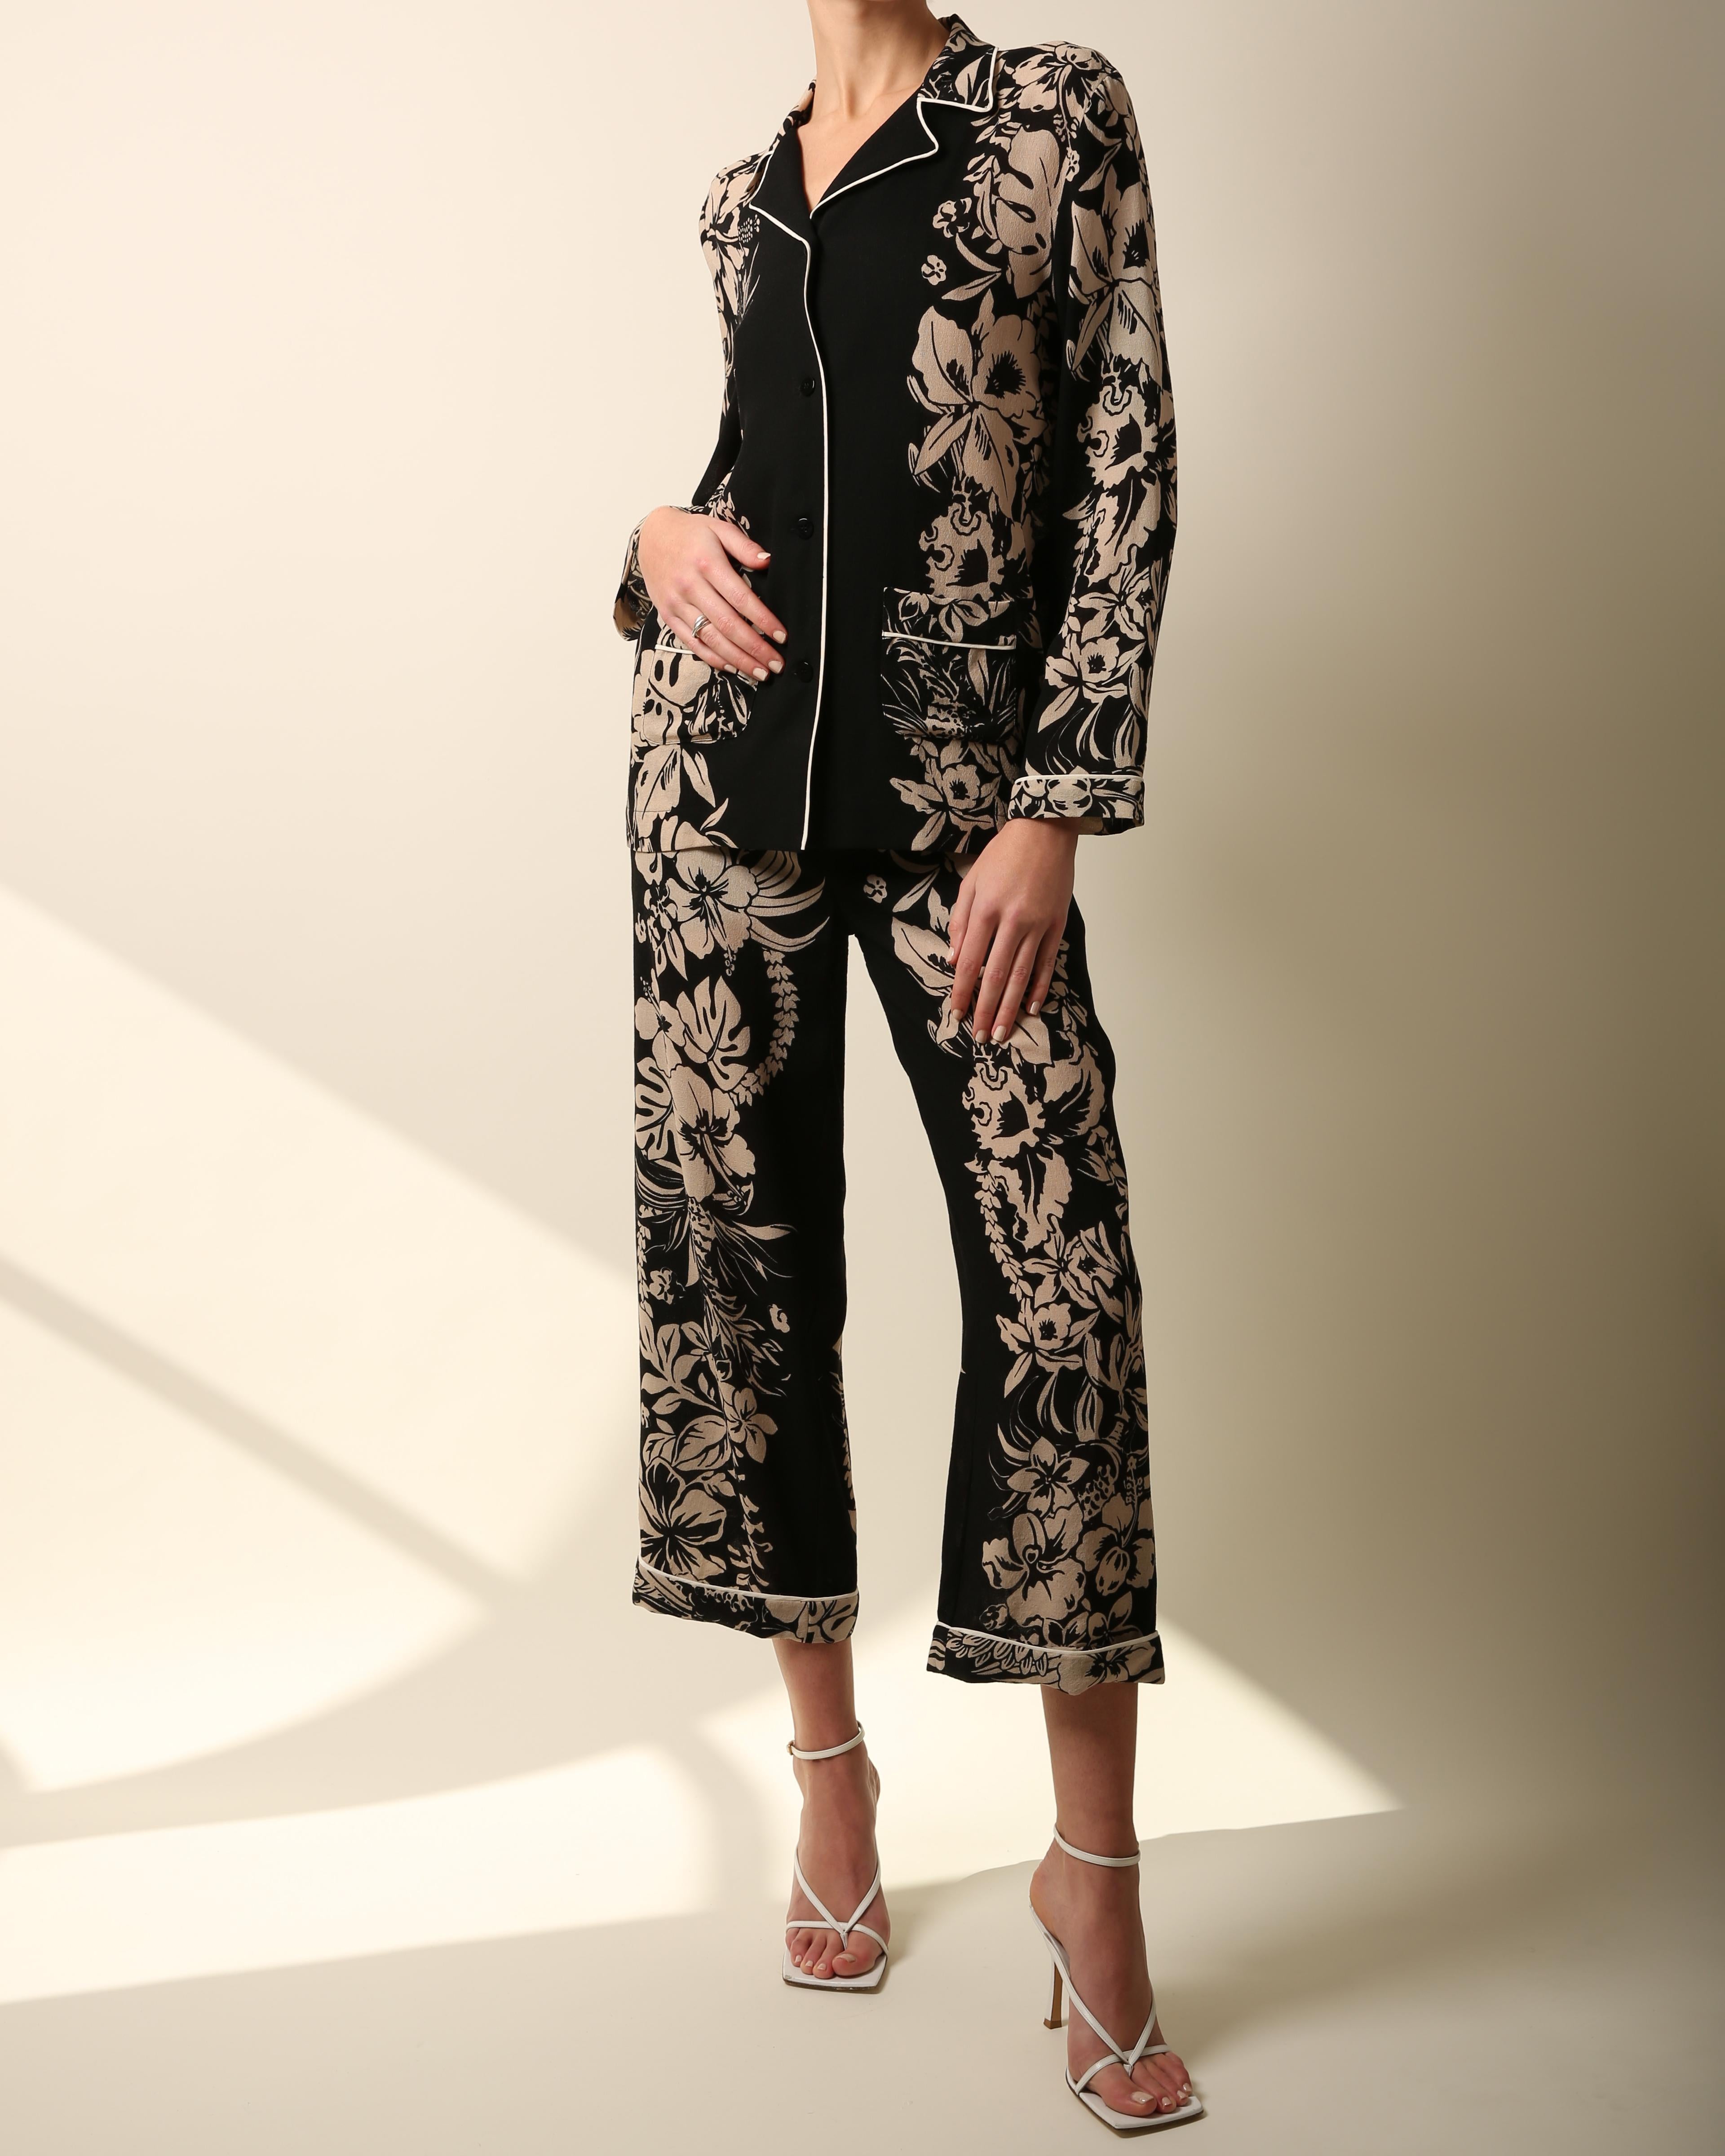 Valentino pyjama style black nude floral print blouse wide dress pants jumpsuit For Sale 4